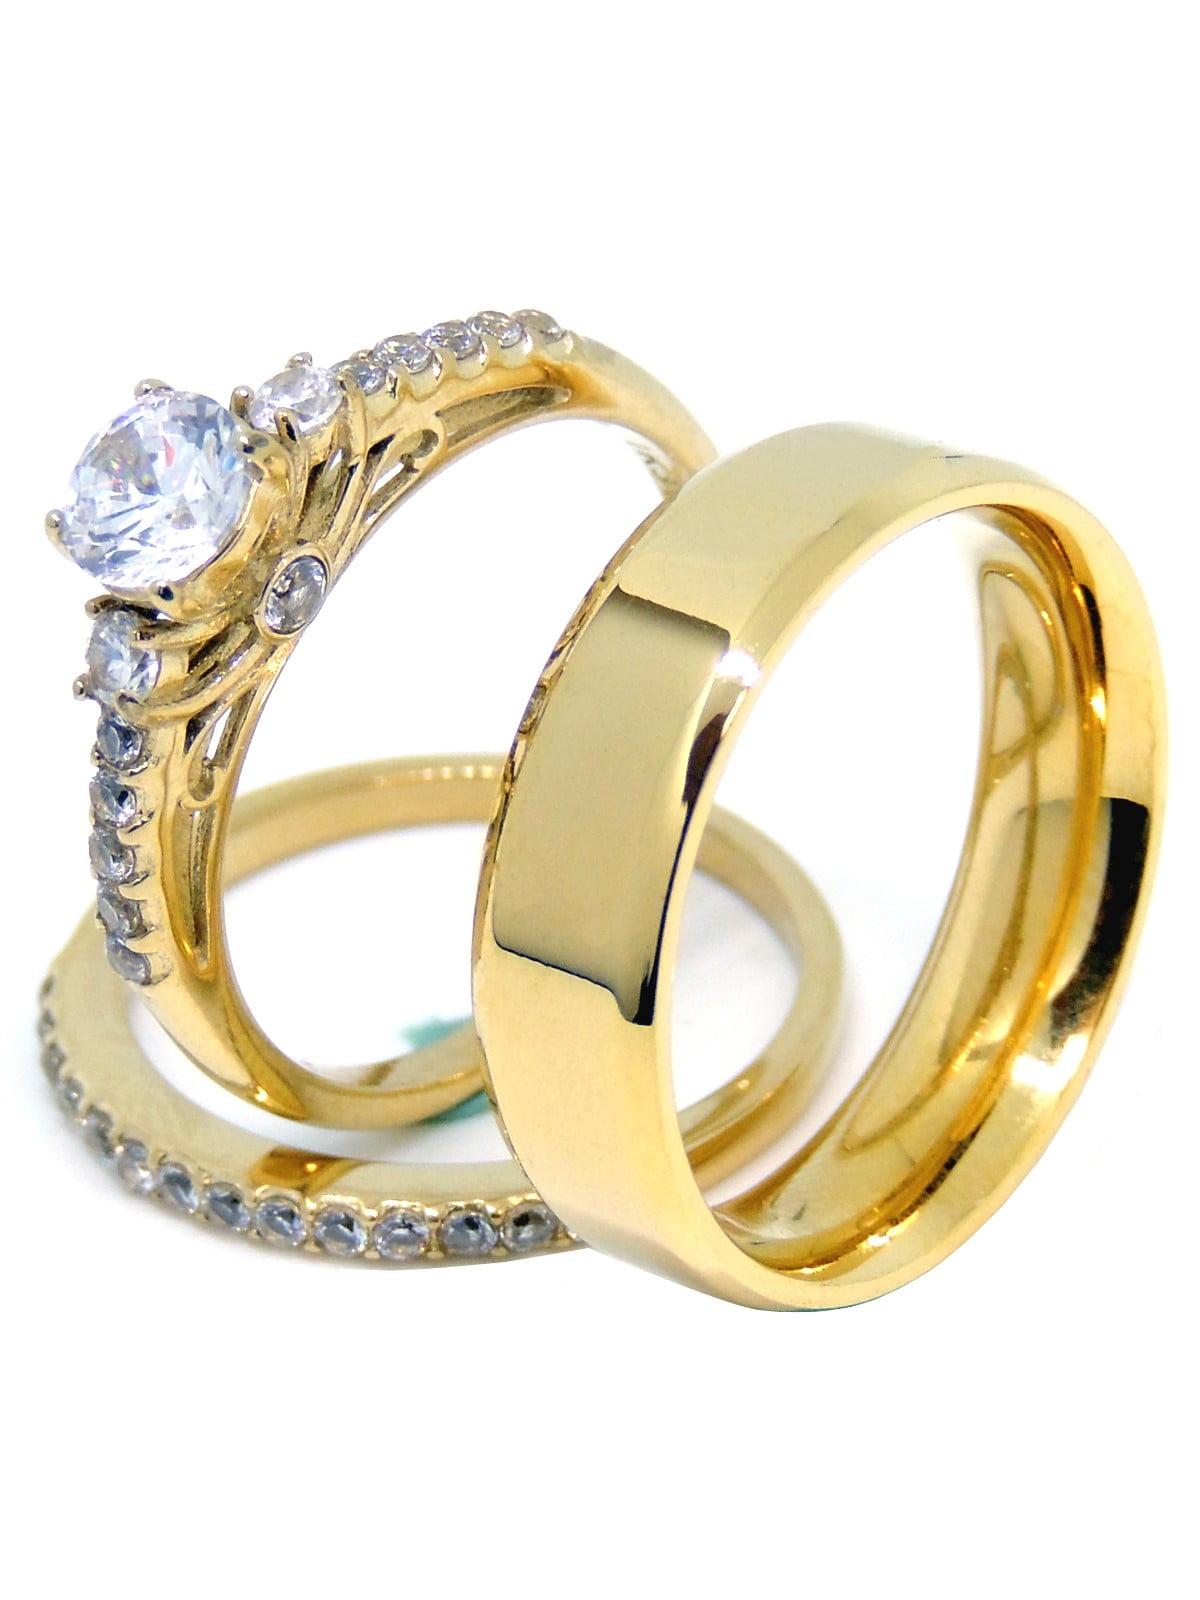 GRT Jewellers | Celebrations Wedding Rings | 15 Sec - YouTube